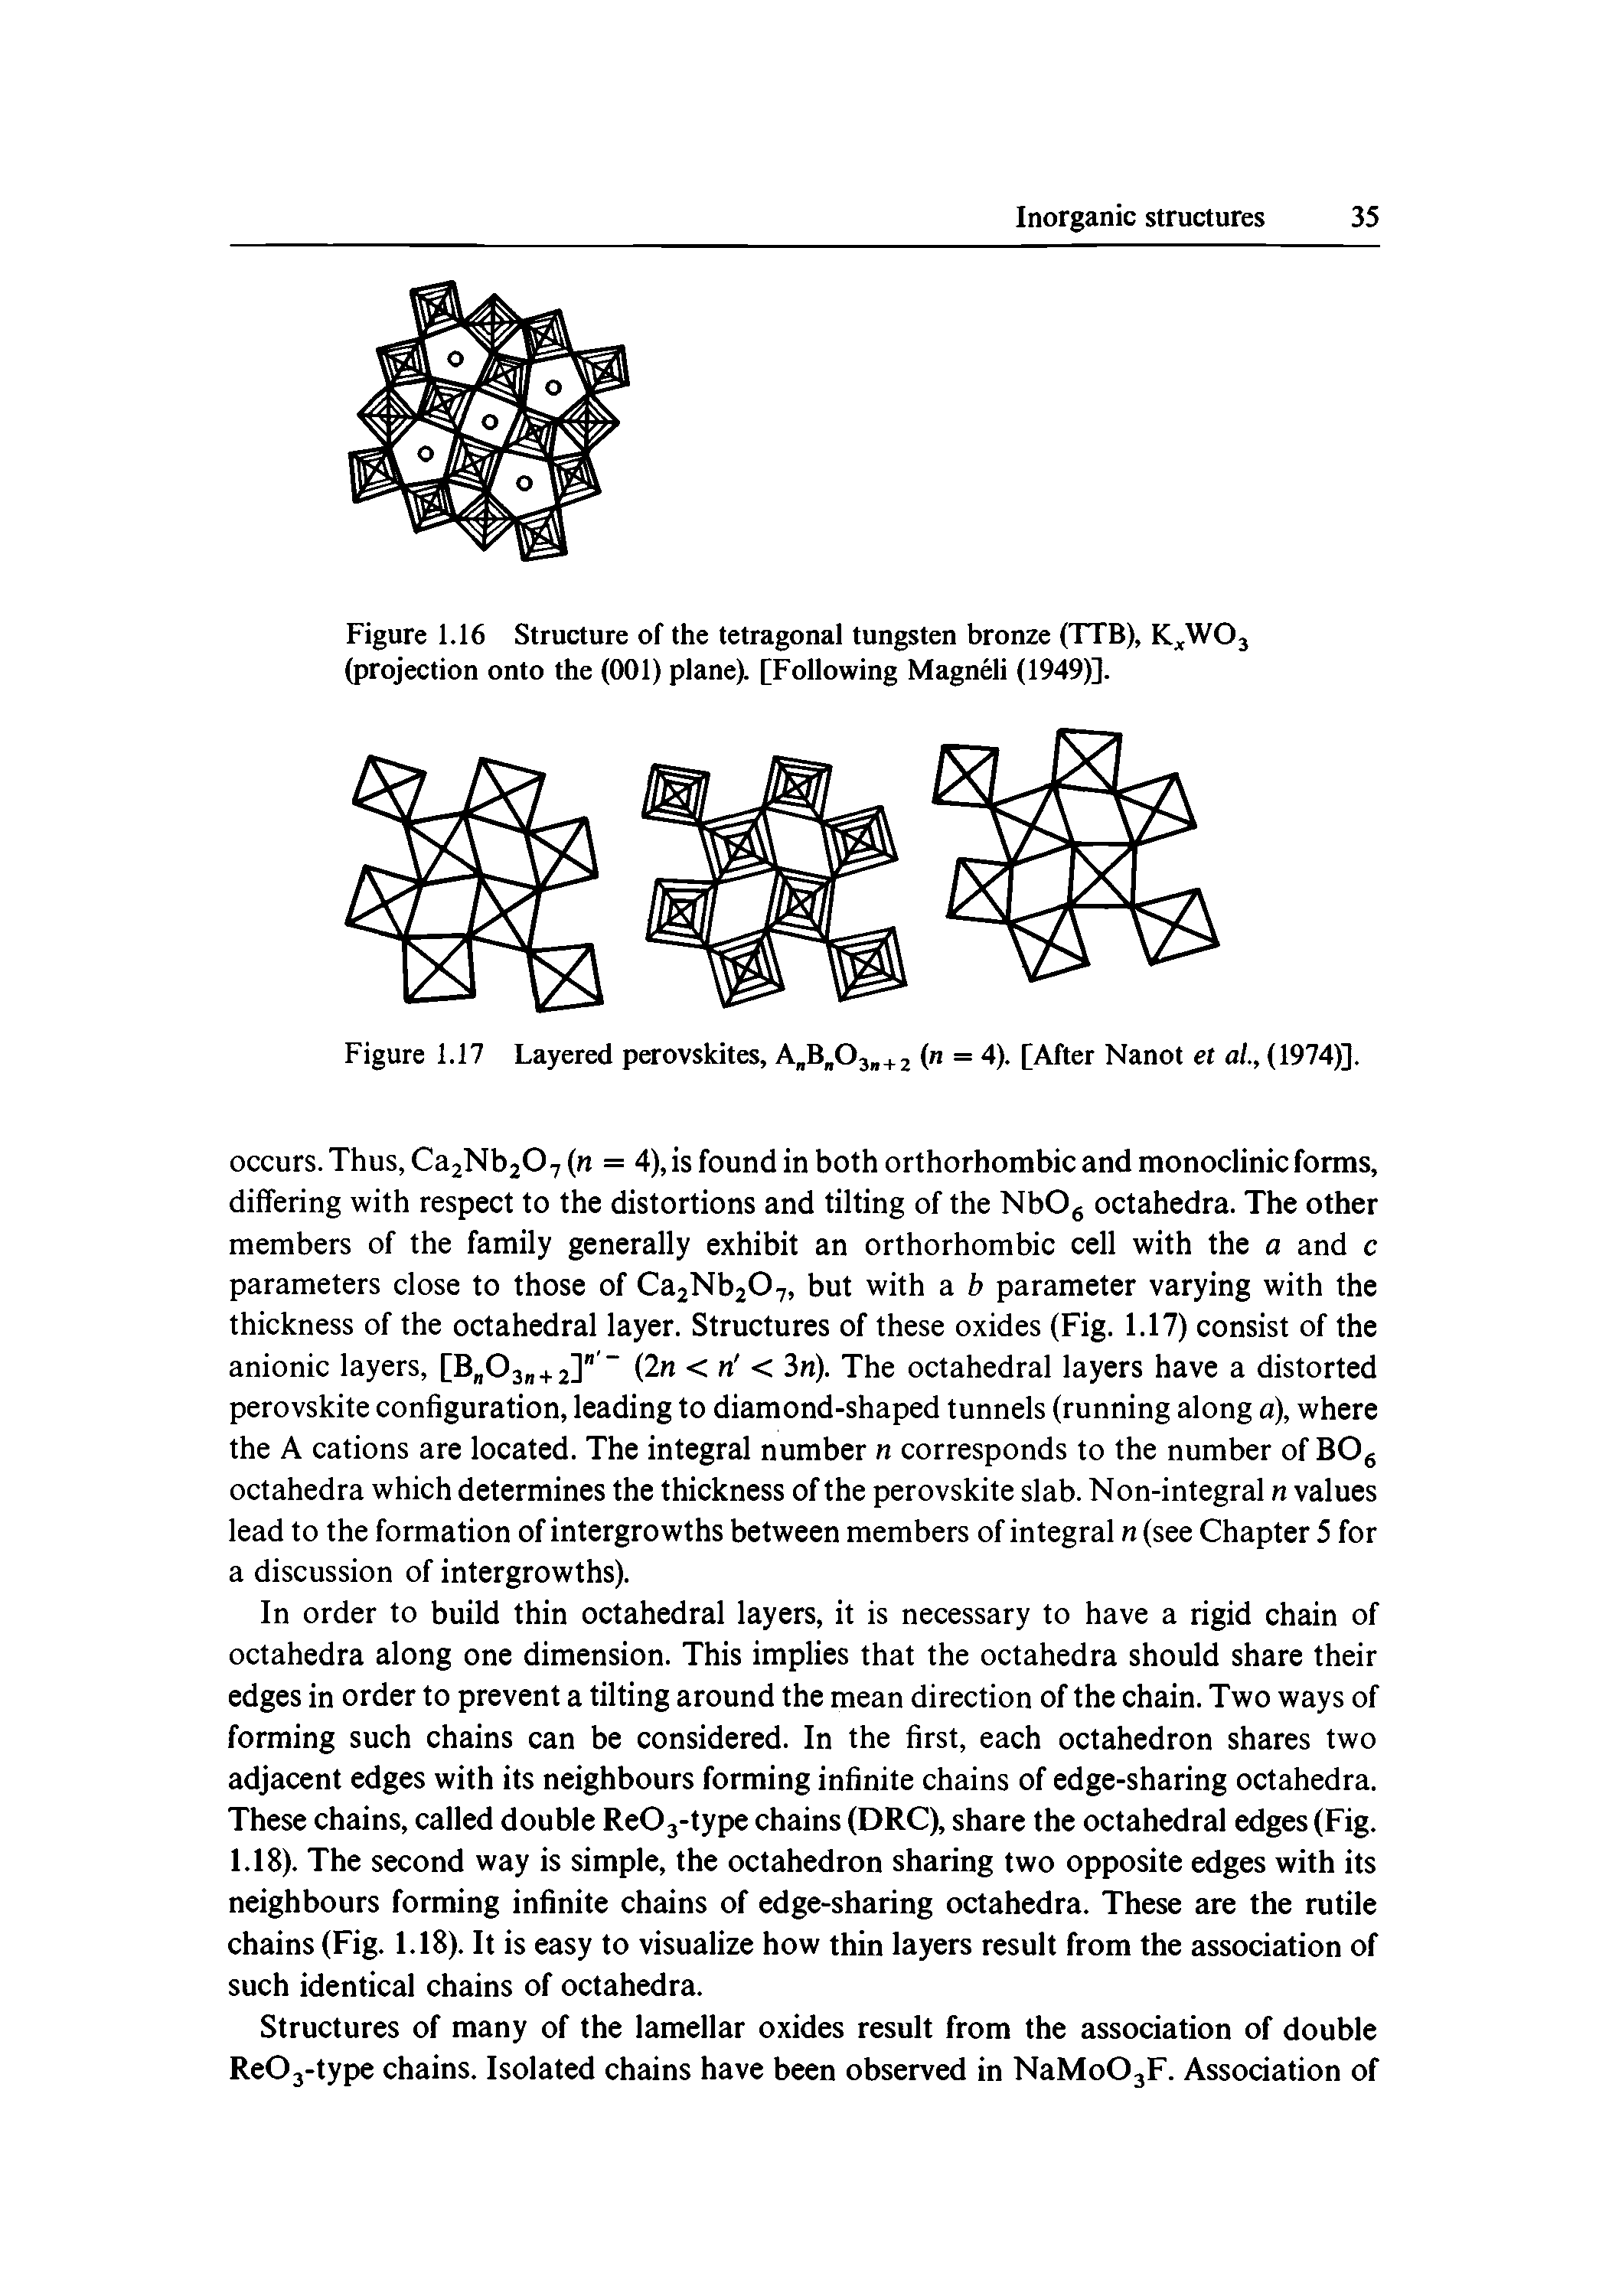 Figure 1.16 Structure of the tetragonal tungsten bronze (TTB), K <WOj (projection onto the (001) plane). [Following Magneli (1949)].